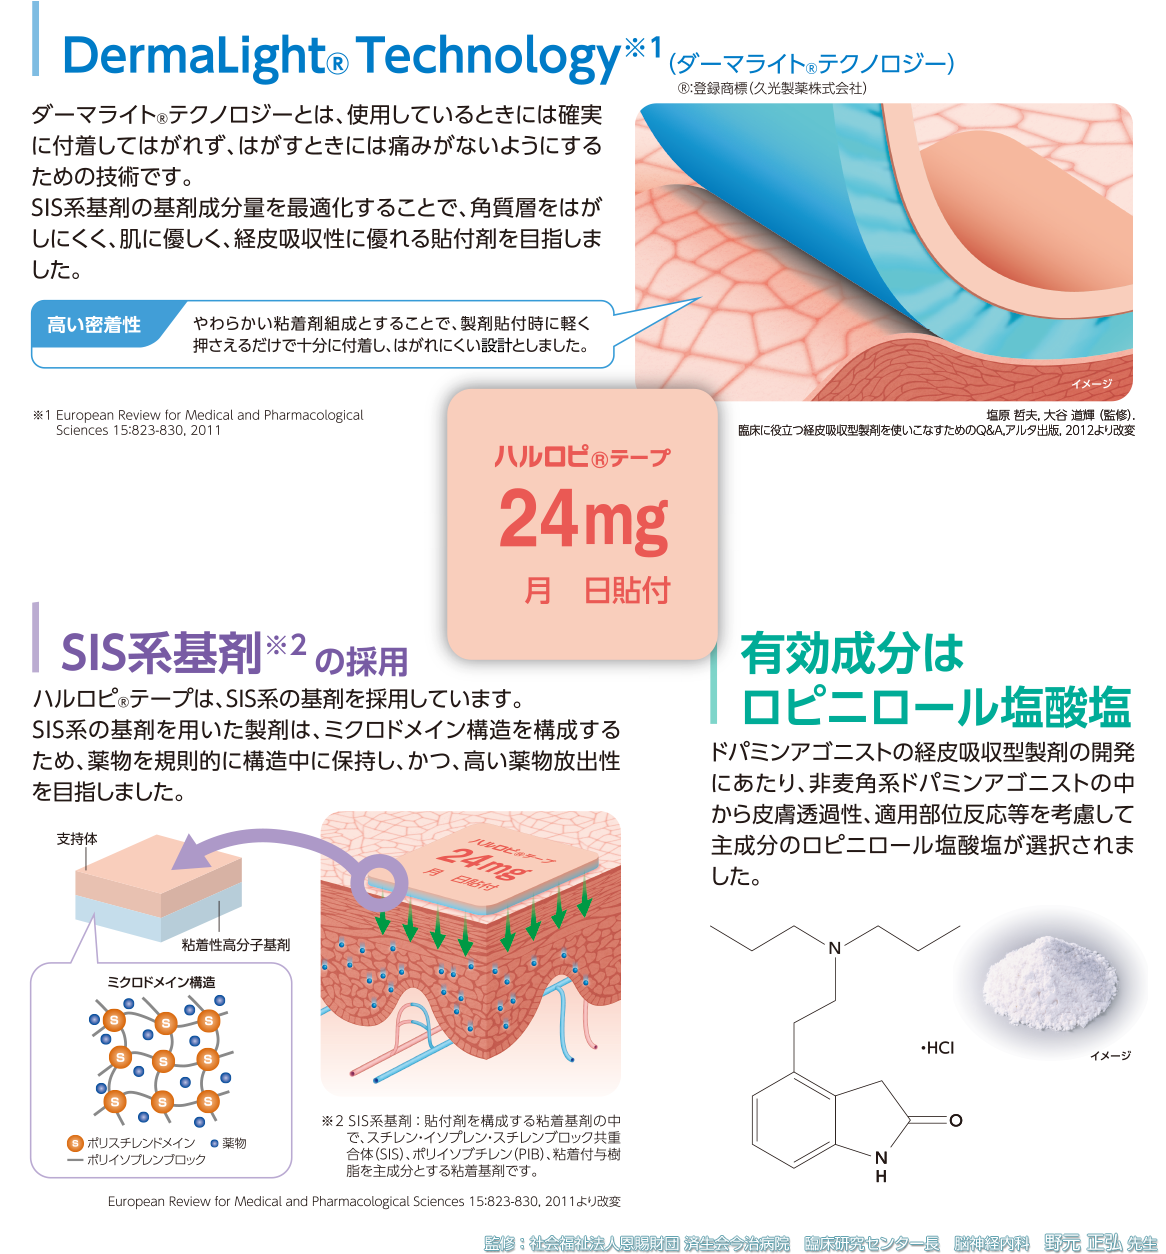 DermaLight® Technology（ダーマライト®テクノロジー）,SIS系基剤の採用,有効成分はロピニロール塩酸塩